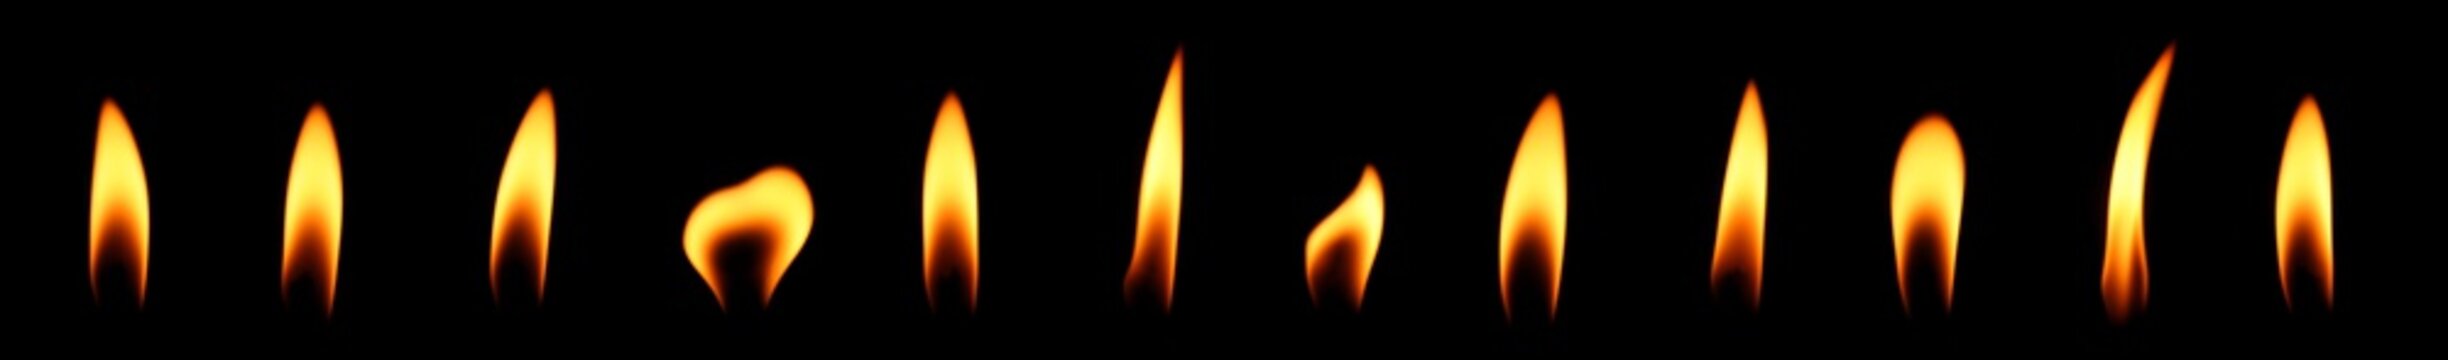 set candle flame is burning At night at close range isolated on black background